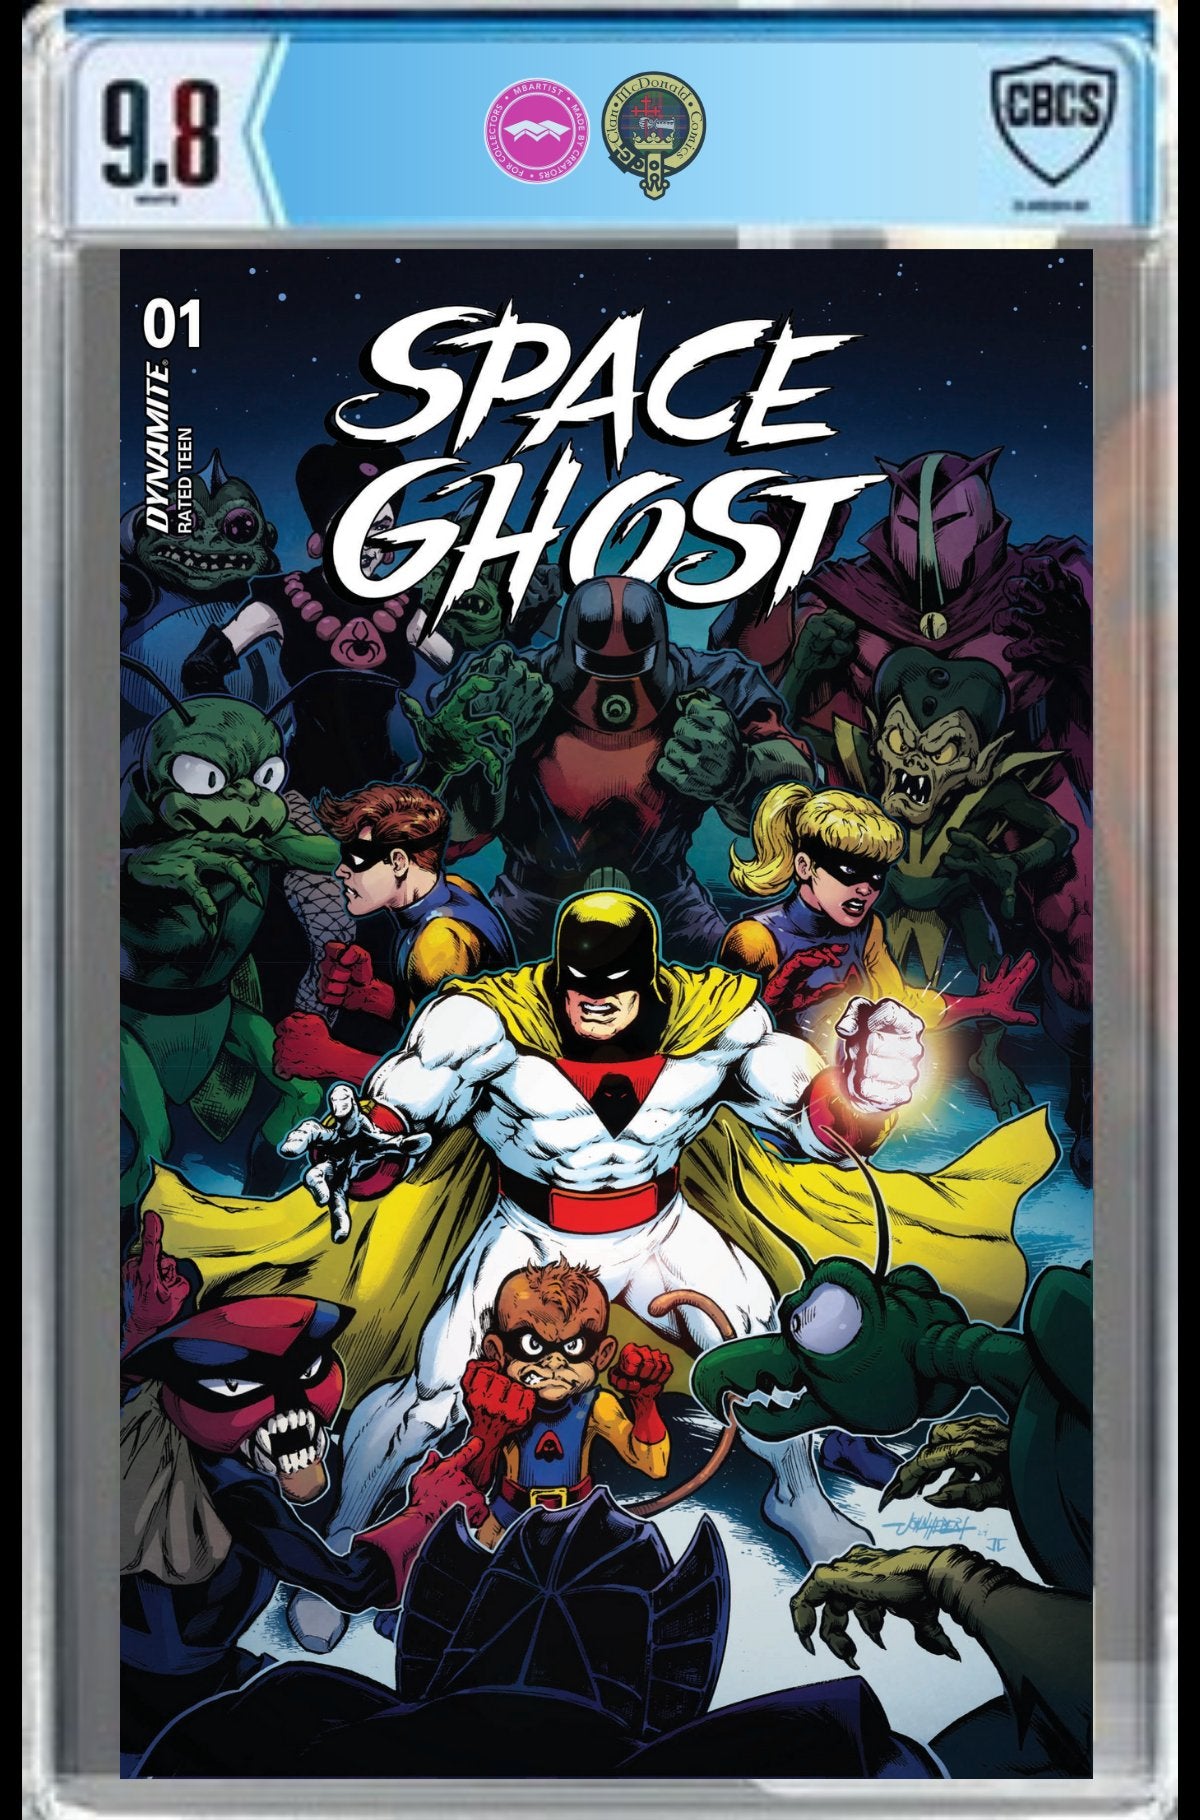 SPACE GHOST #1 EXCLUSIVE COVER BY JOHN HEBEERT